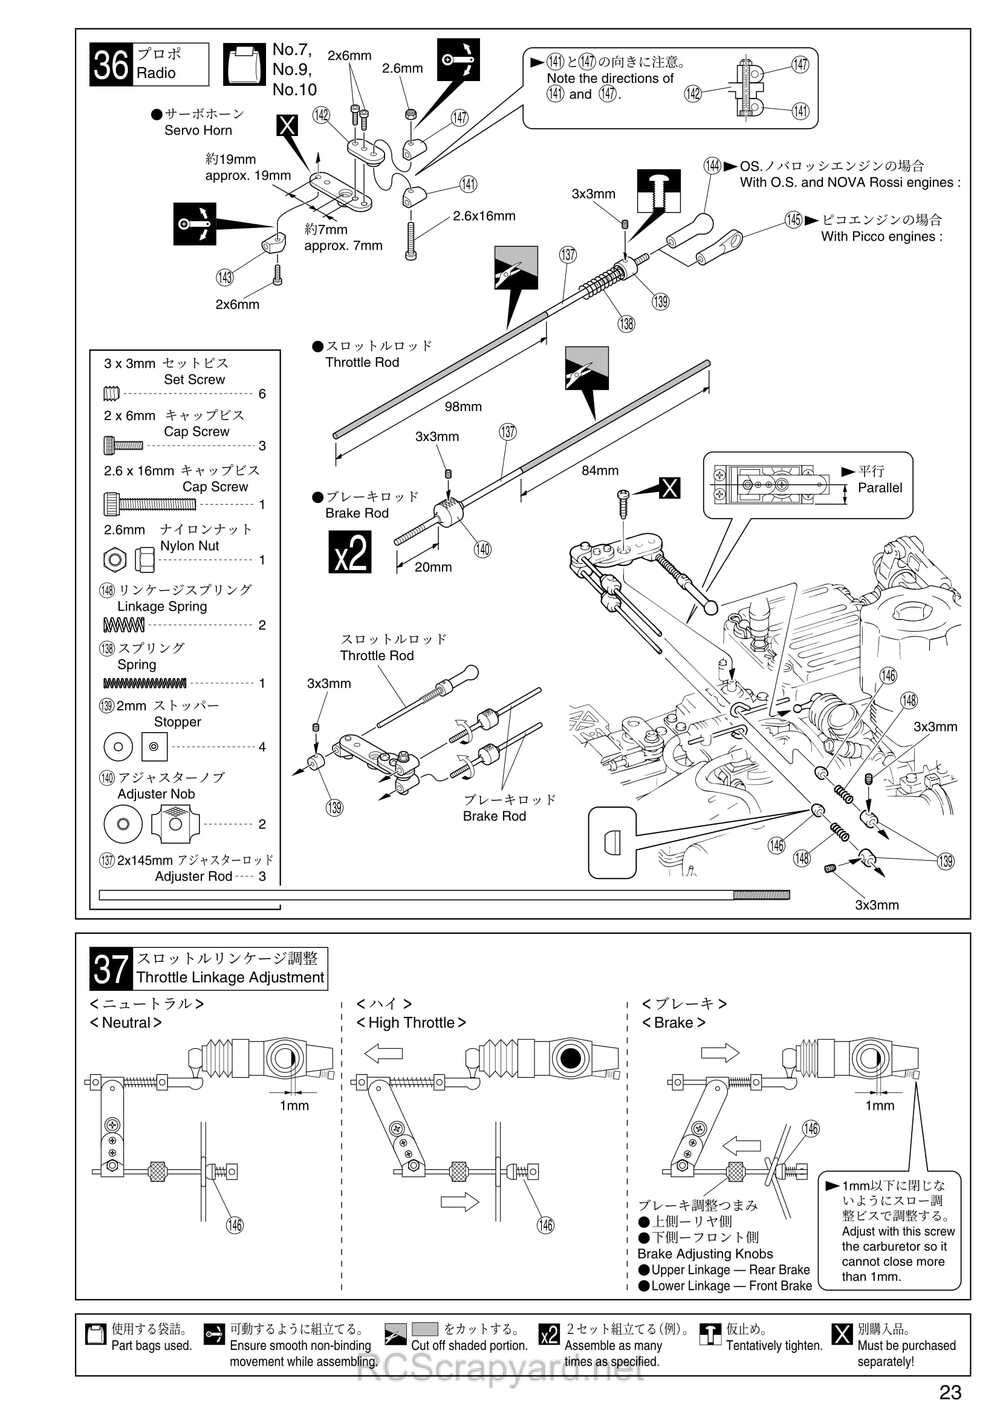 Kyosho - 31273 - Inferno-MP-7-5-Yuichi3 - Manual - Page 23